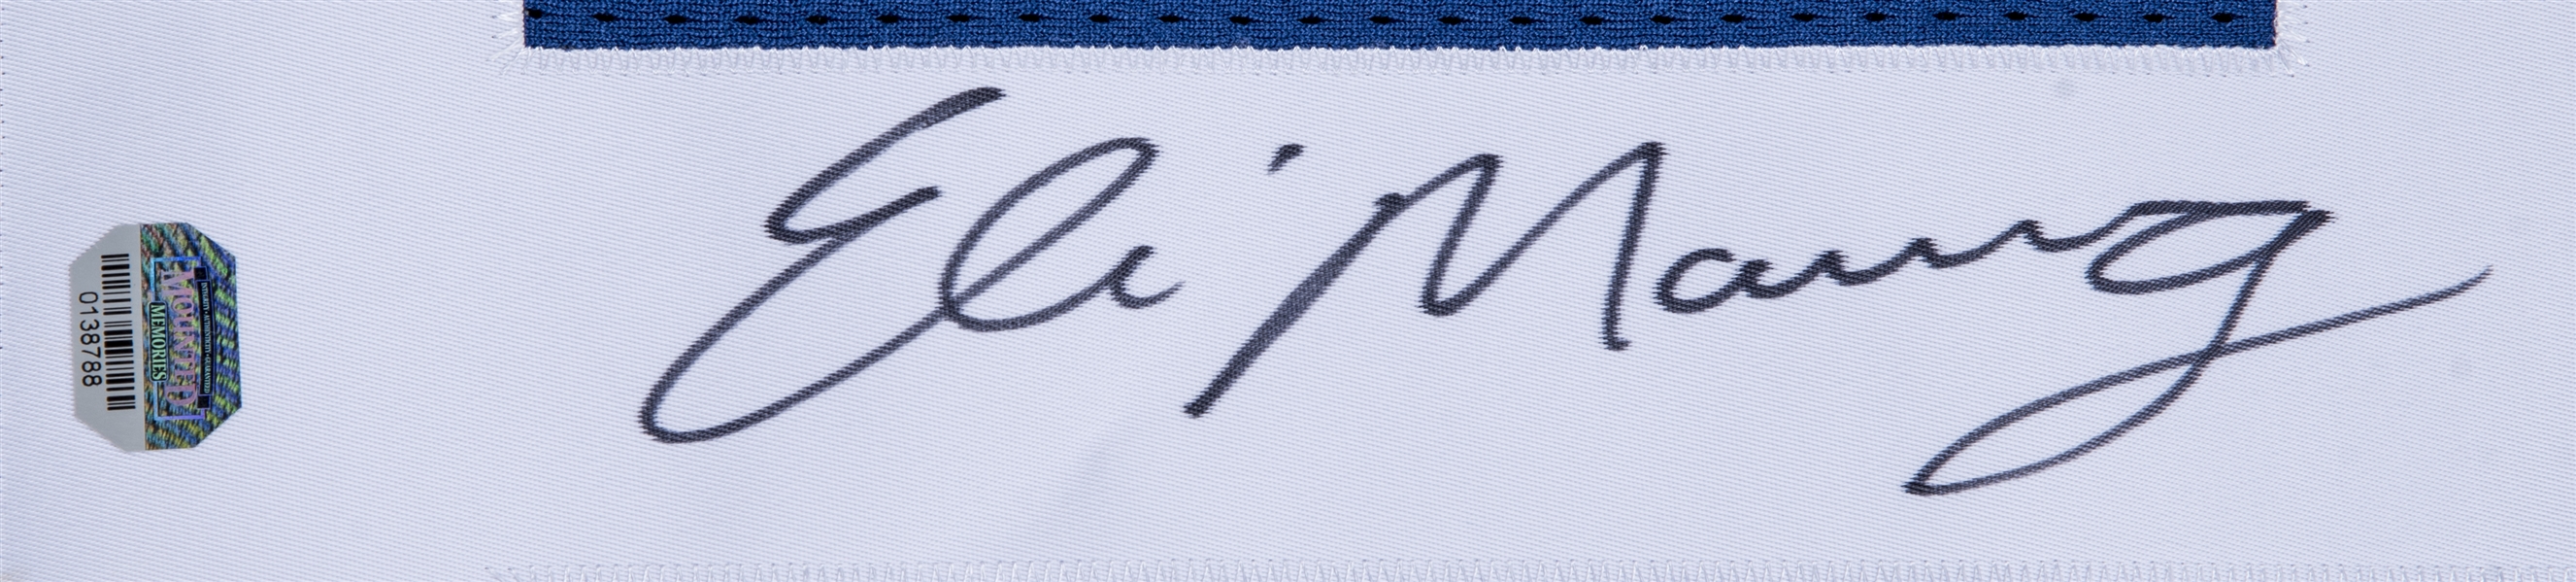 eli manning autographed jersey